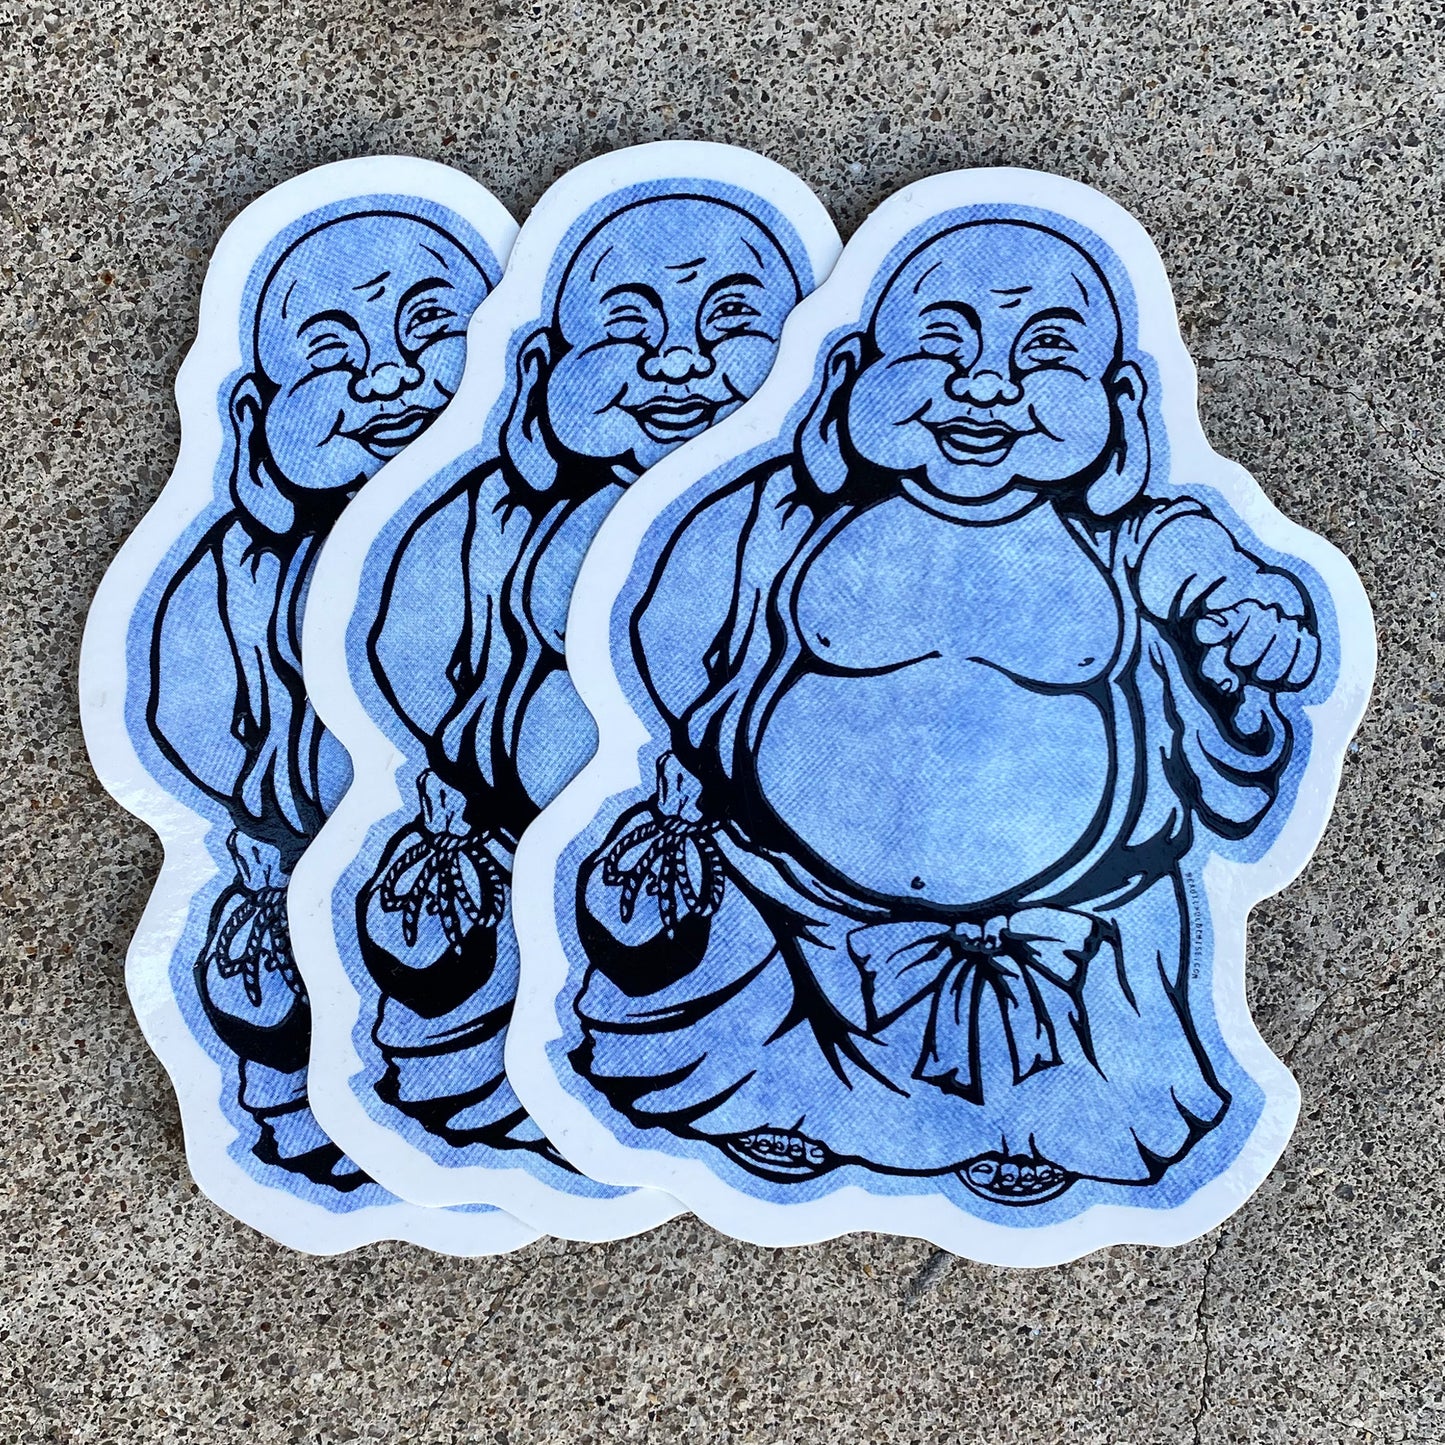 Buddha Bing Sticker Pack